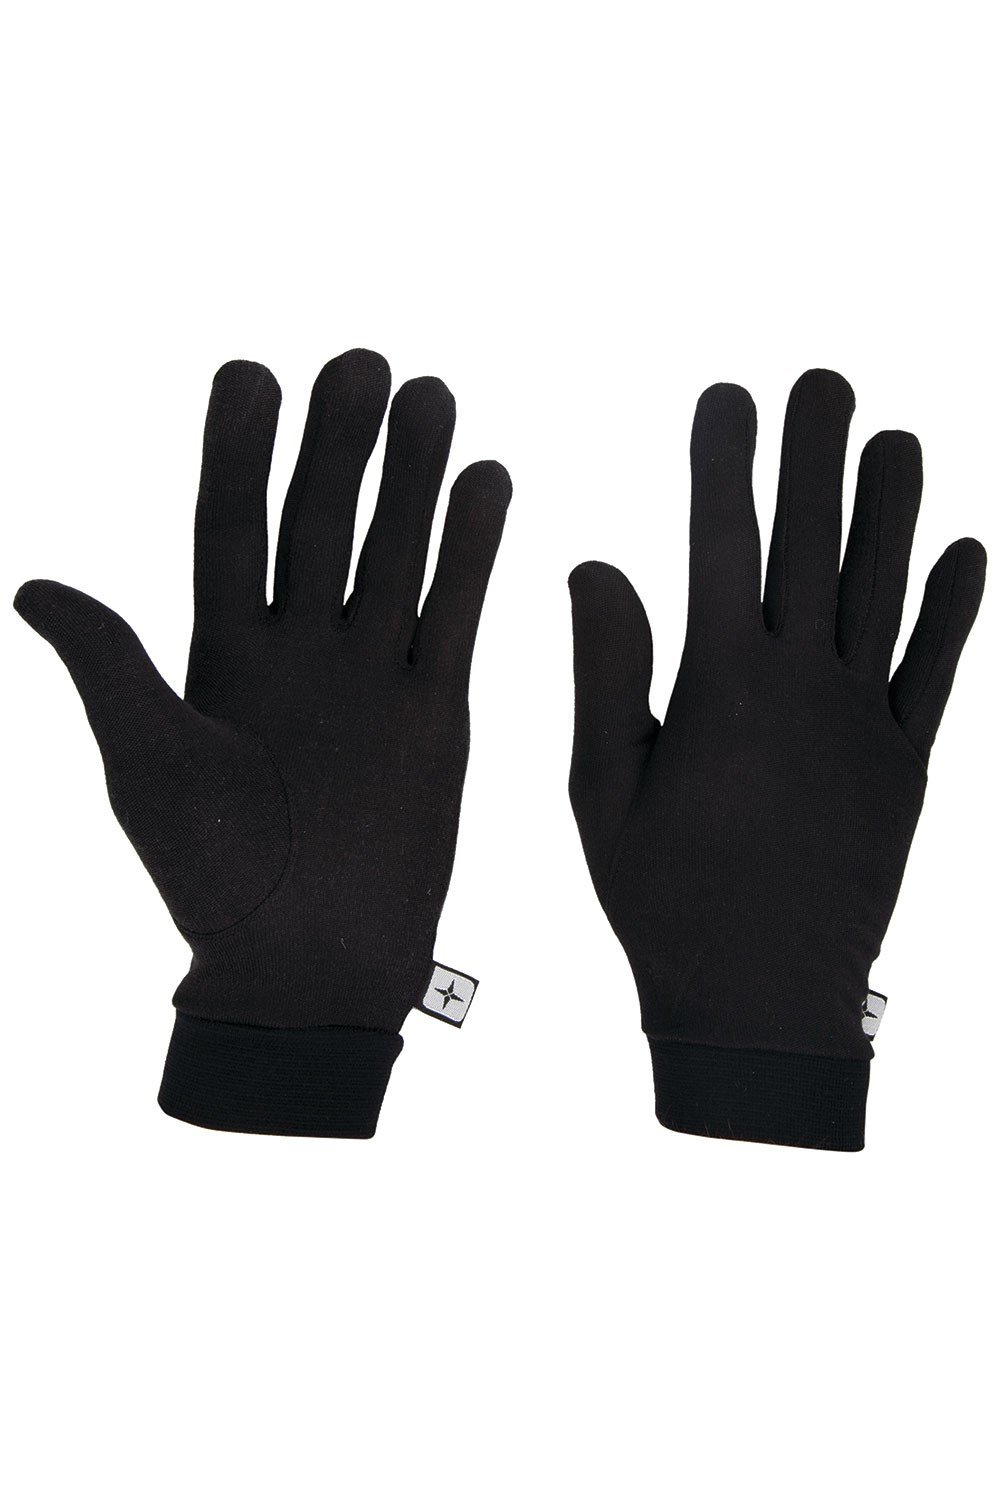 Mountainlife Silk Gloves Glove Liner Ski Sports Black 